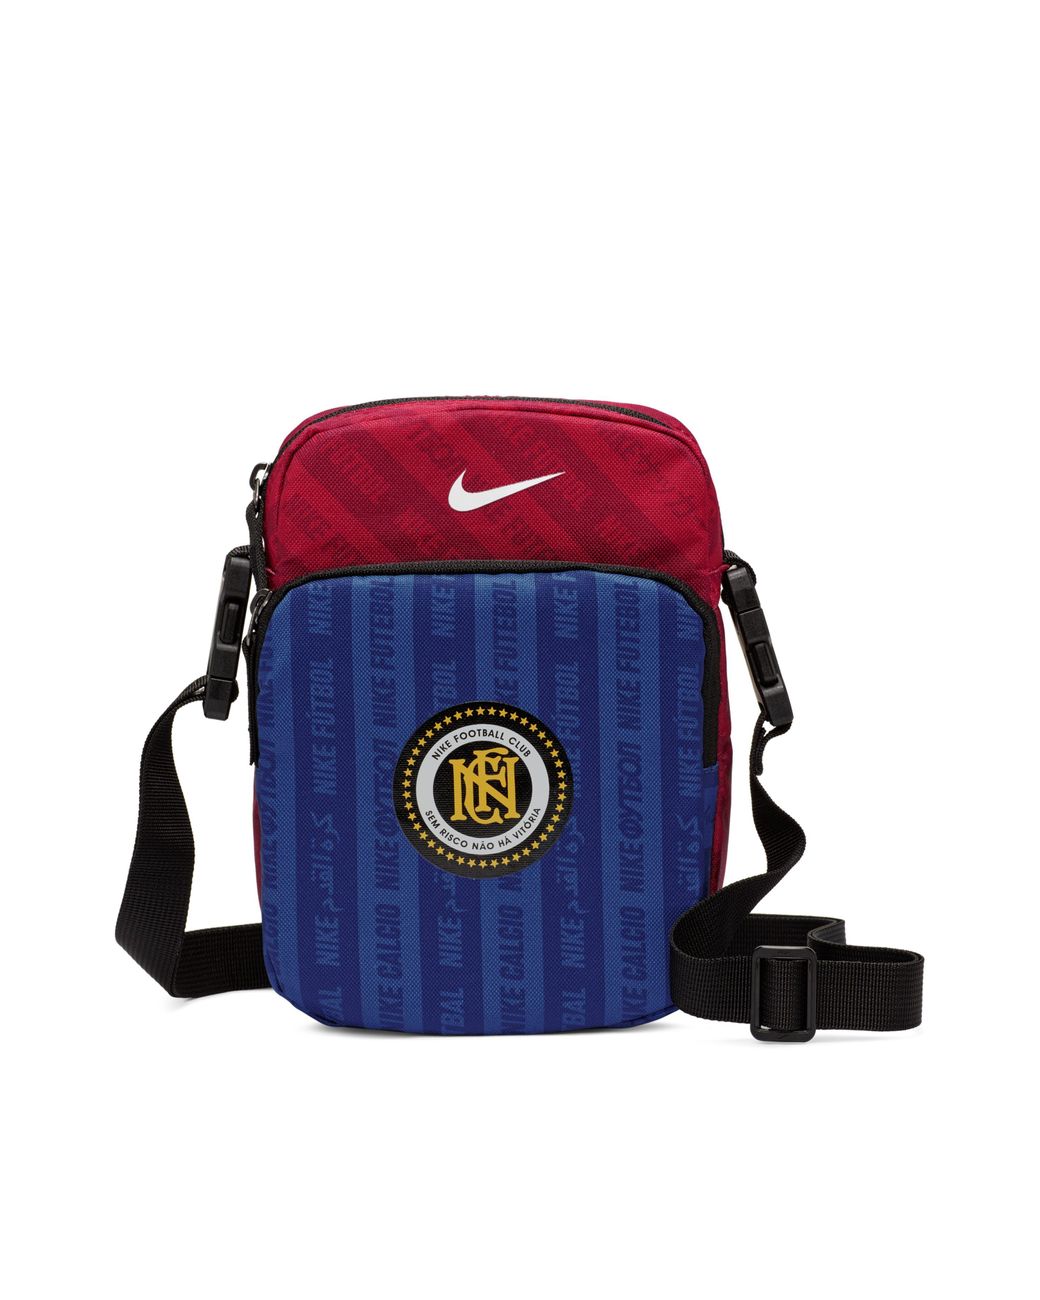 Nike F.c. Football Cross-body Bag in Red - Lyst